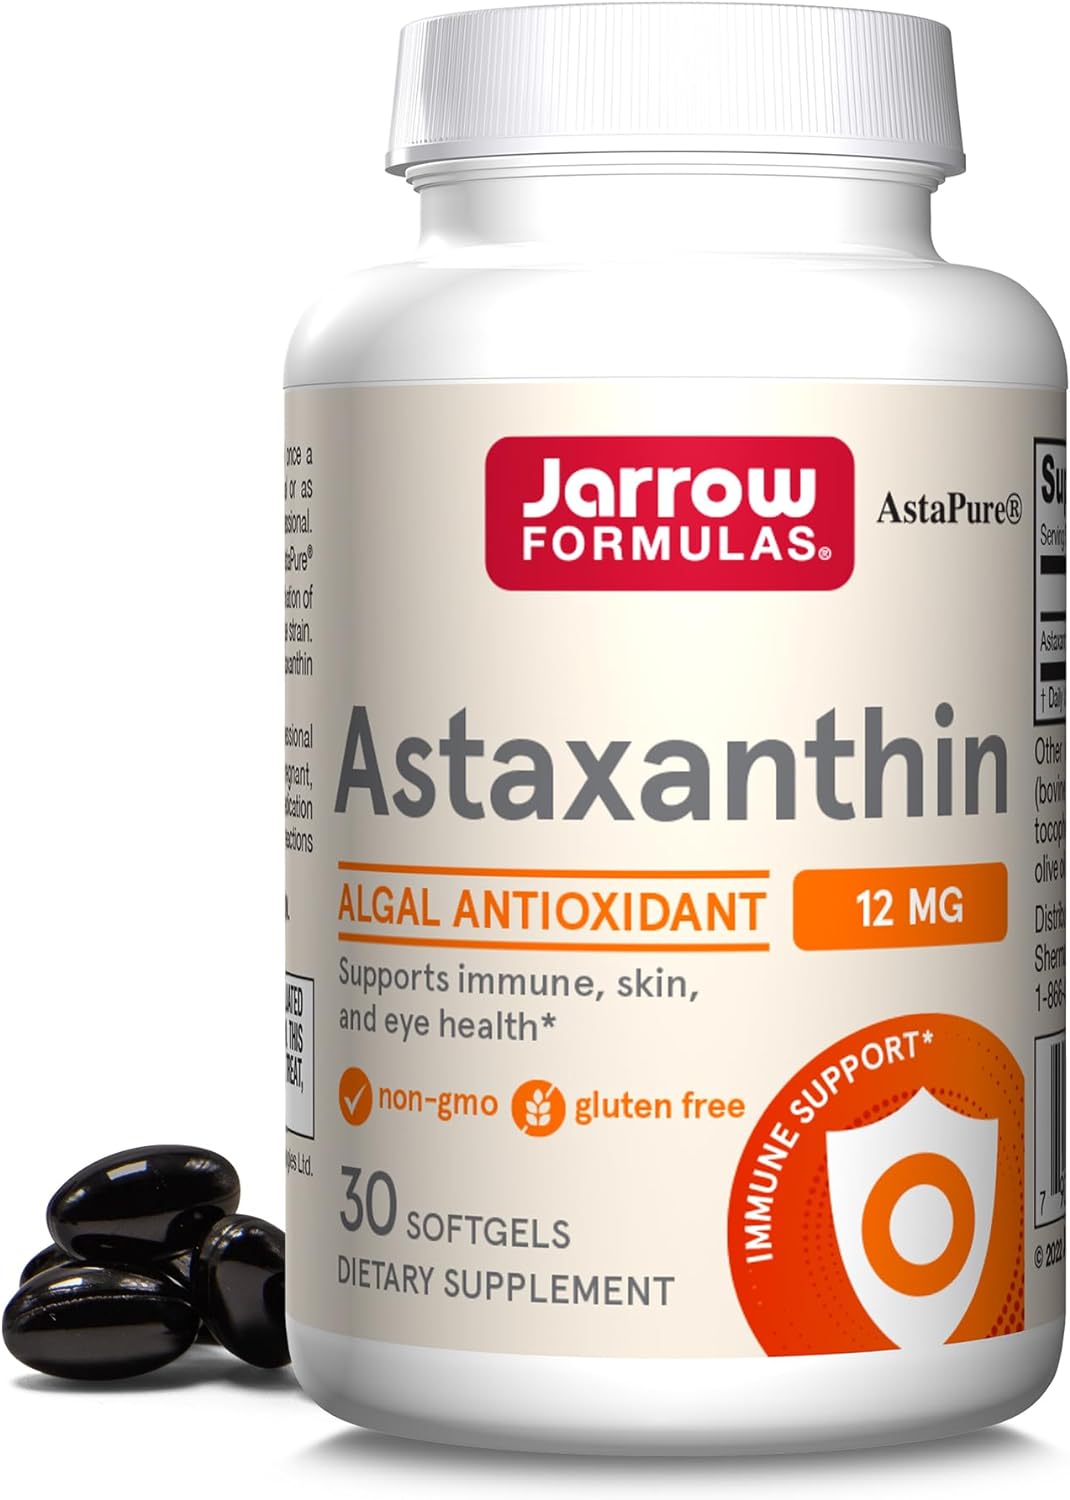 Jarrow Formulas Astaxanthin 12 mg - 30 Servings (Softgels) - Algal Ant